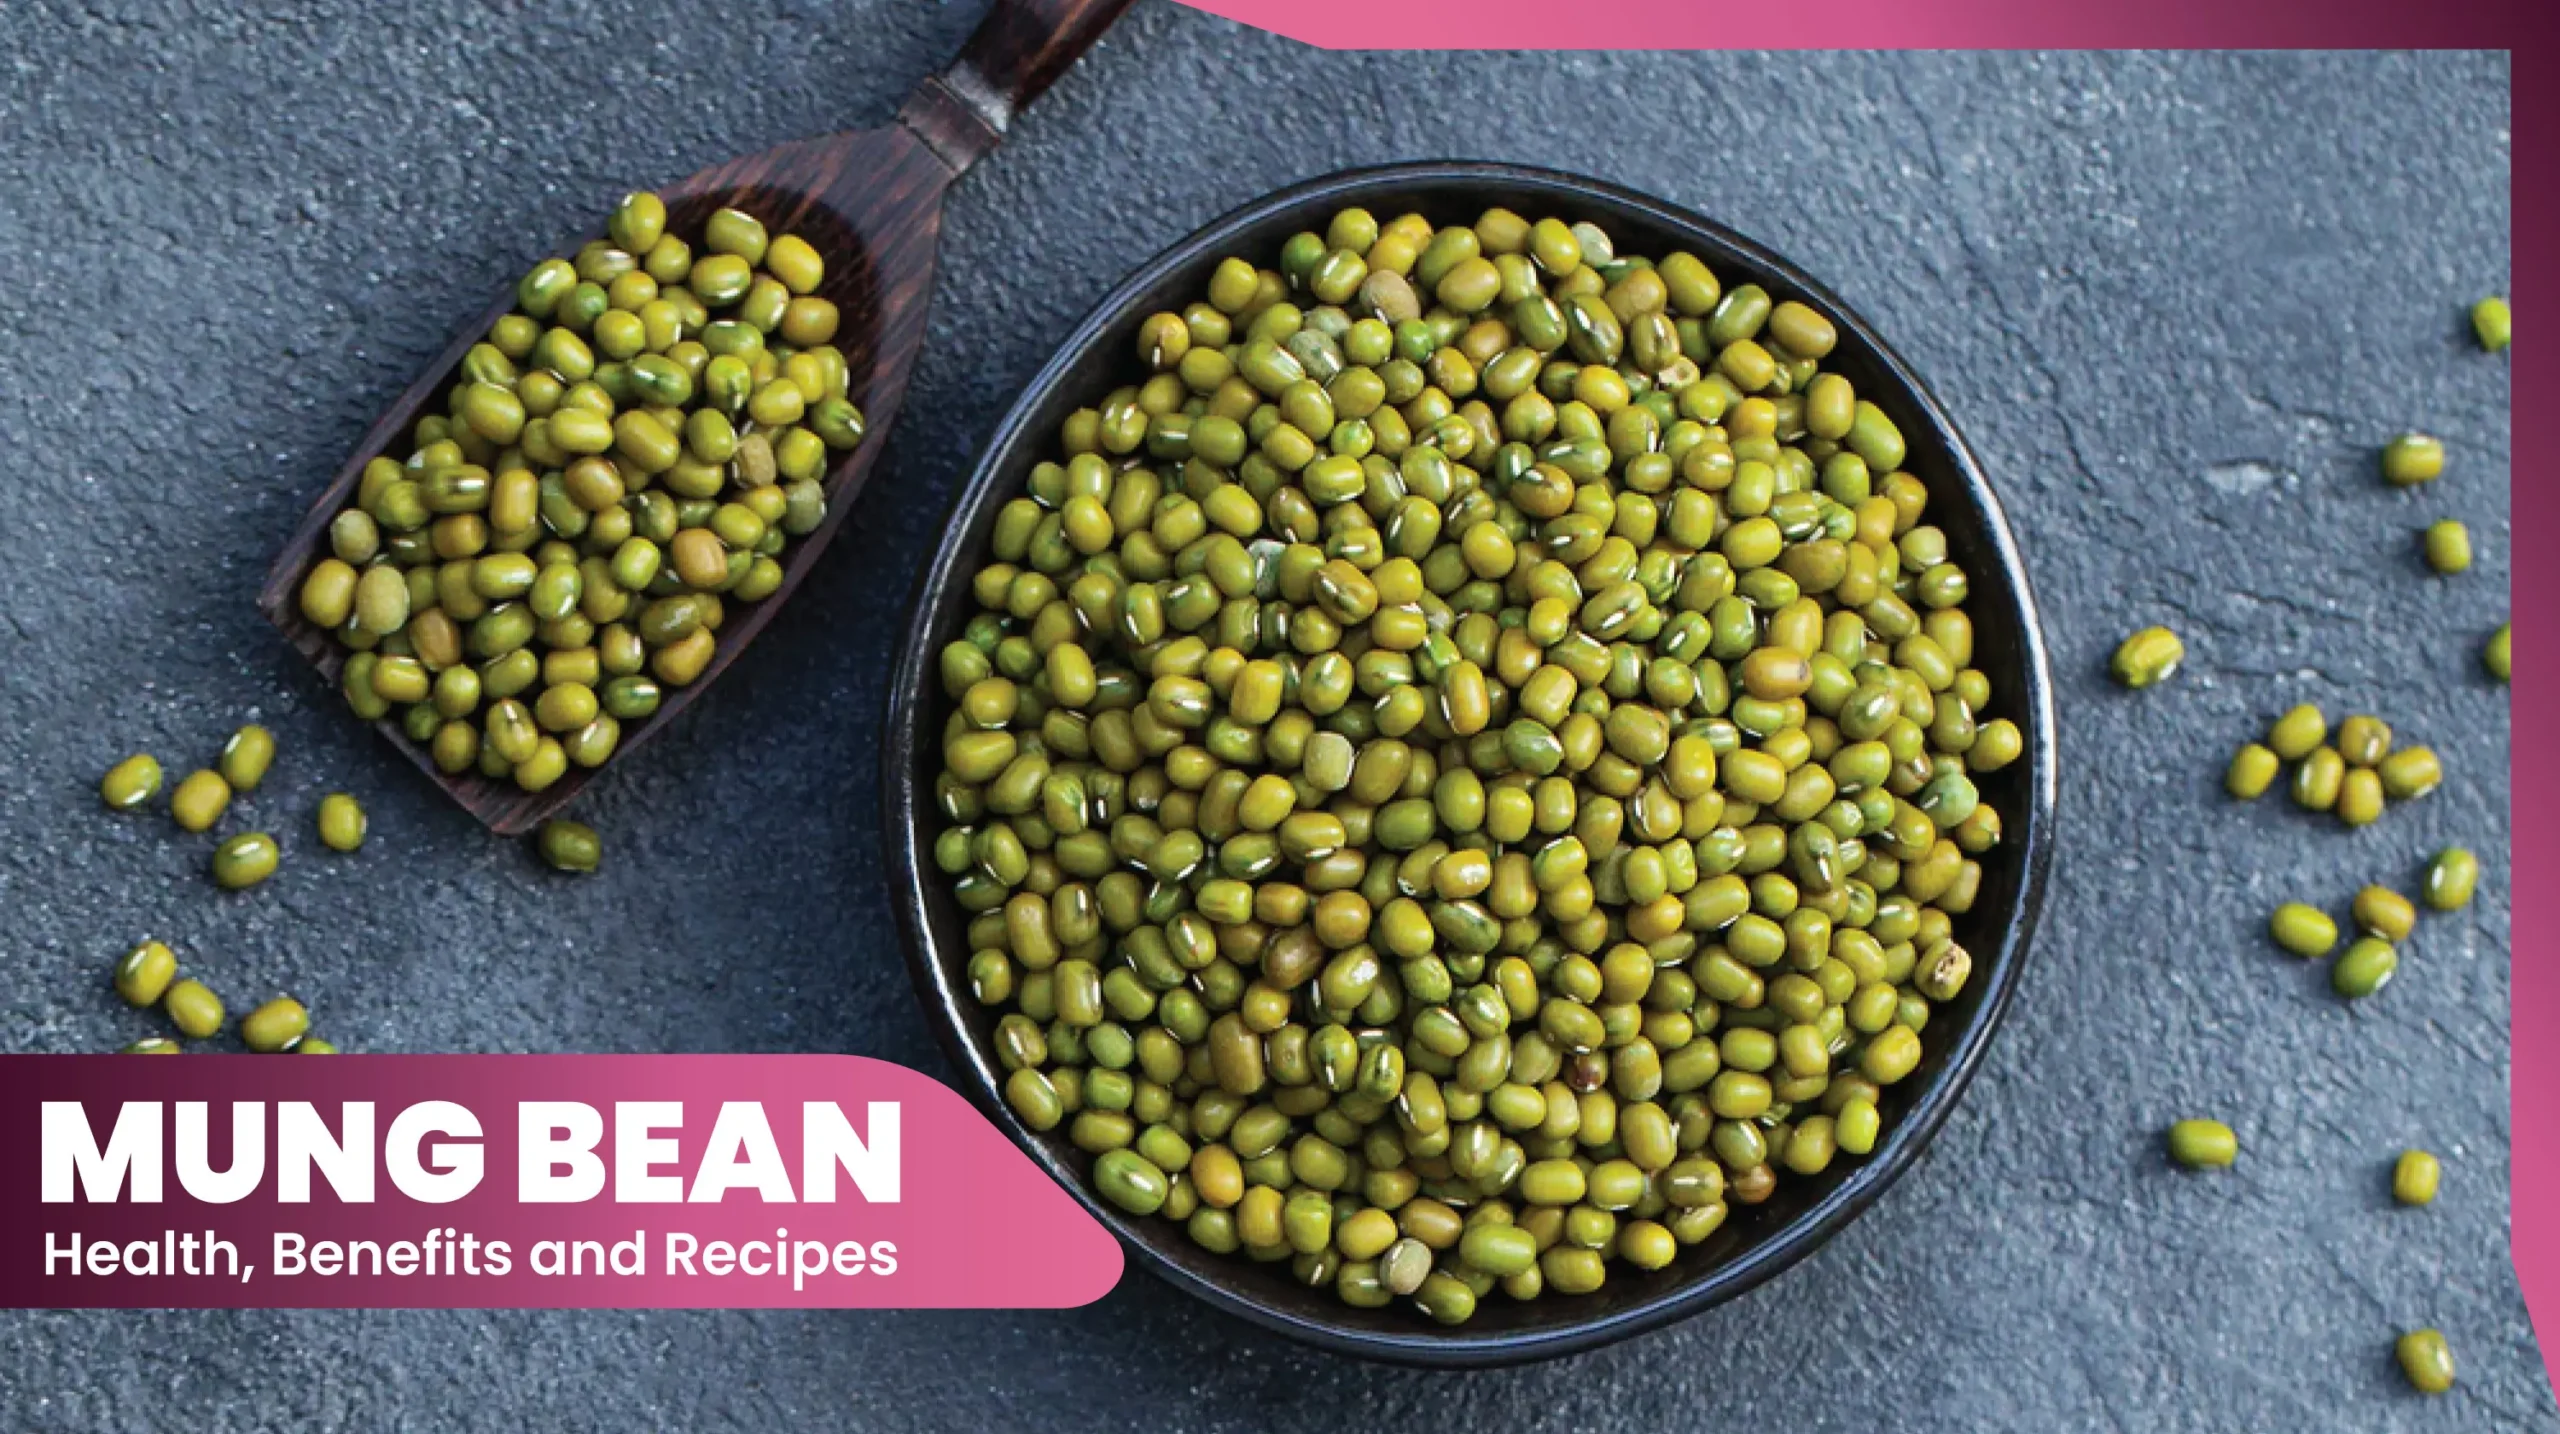 11mung bean health benefits and recipes